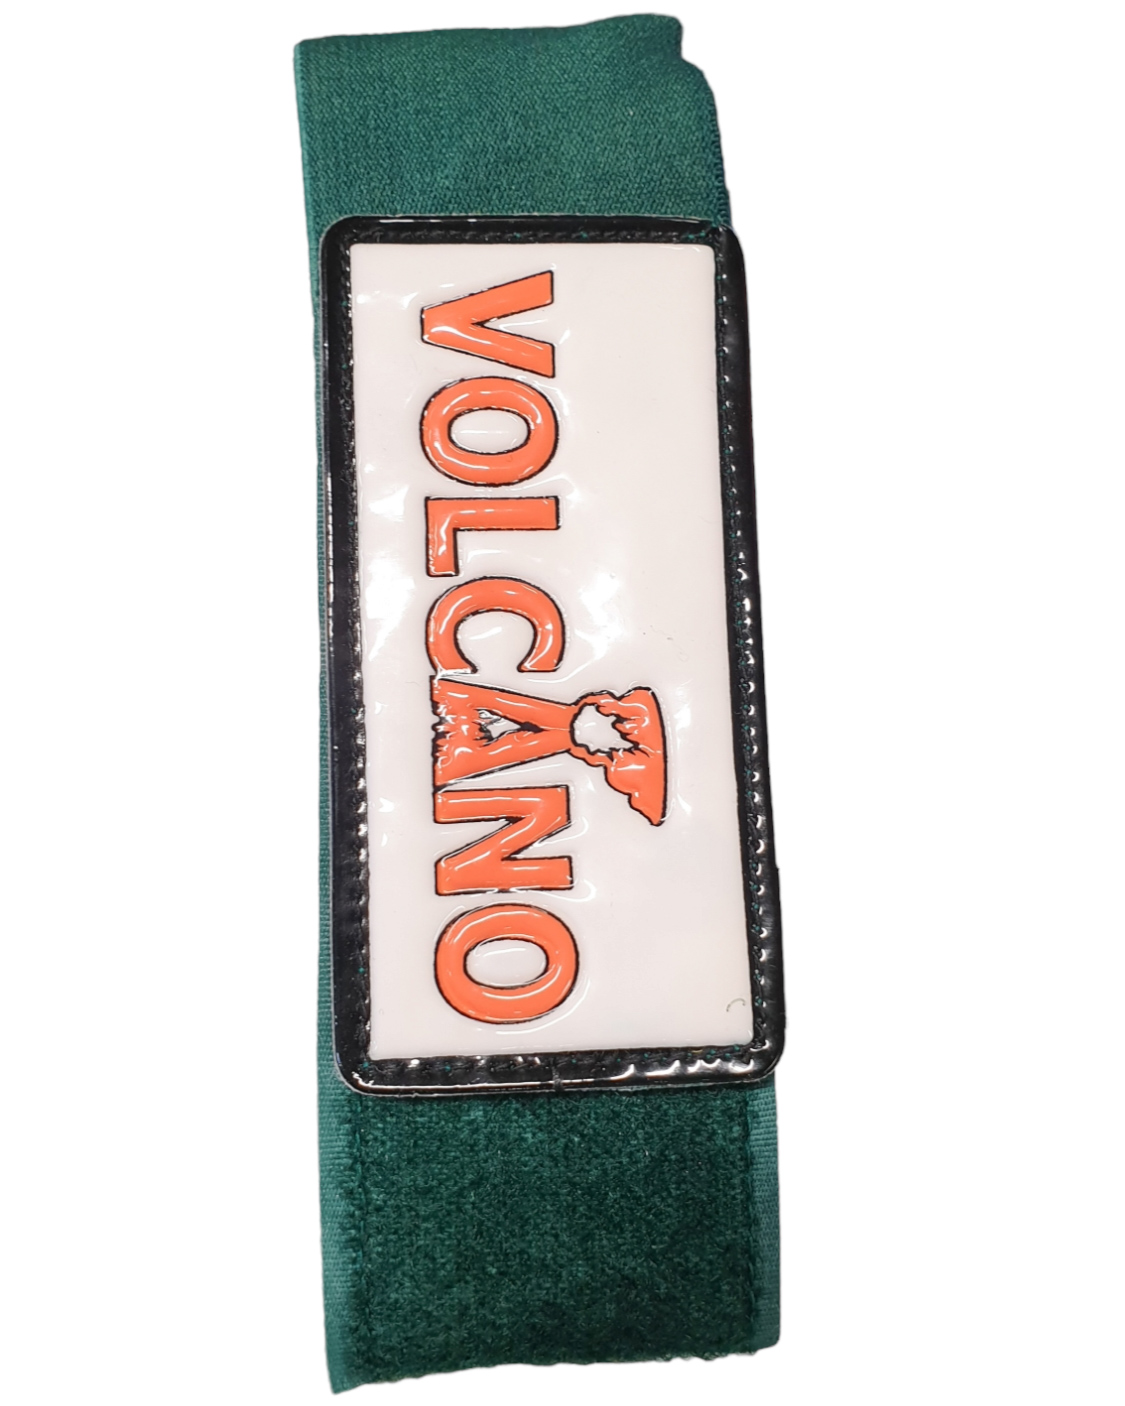 VolcAno Arm Band - Green